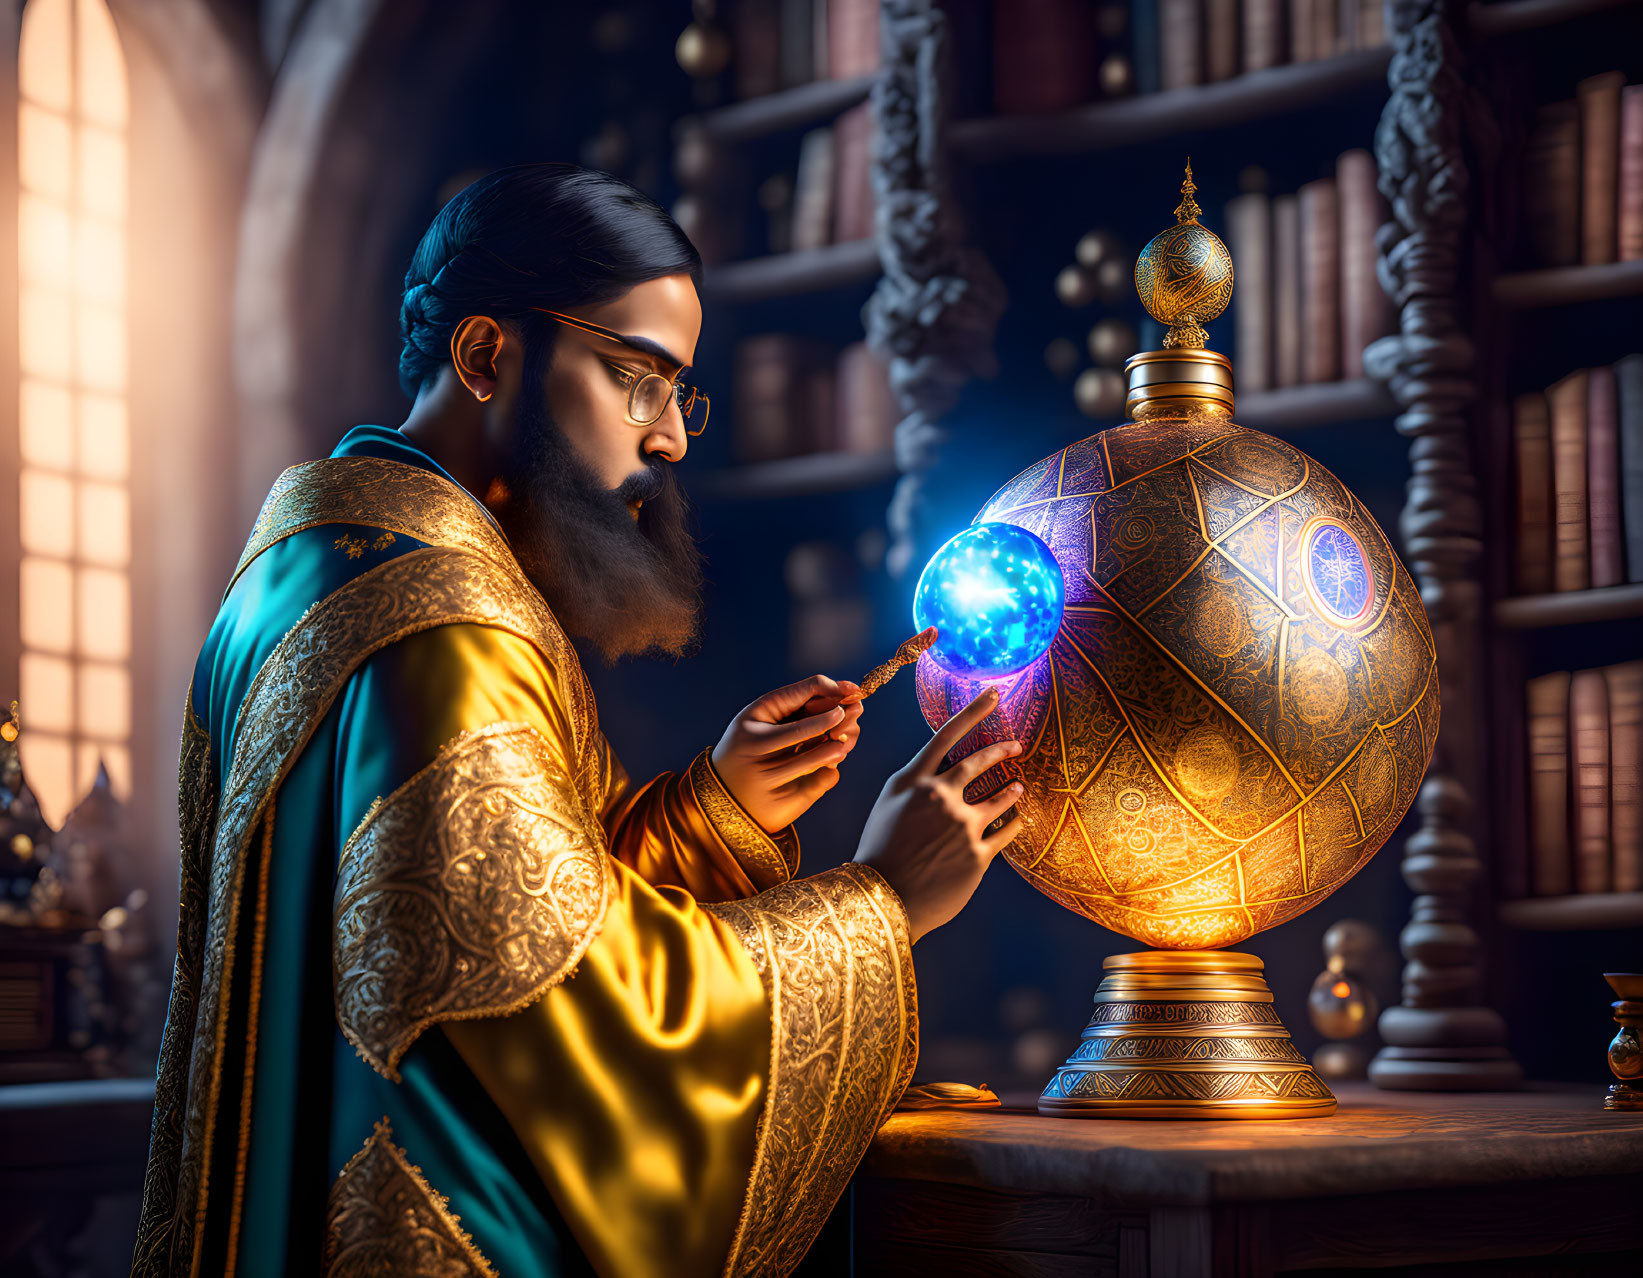 The alchemist-wizard